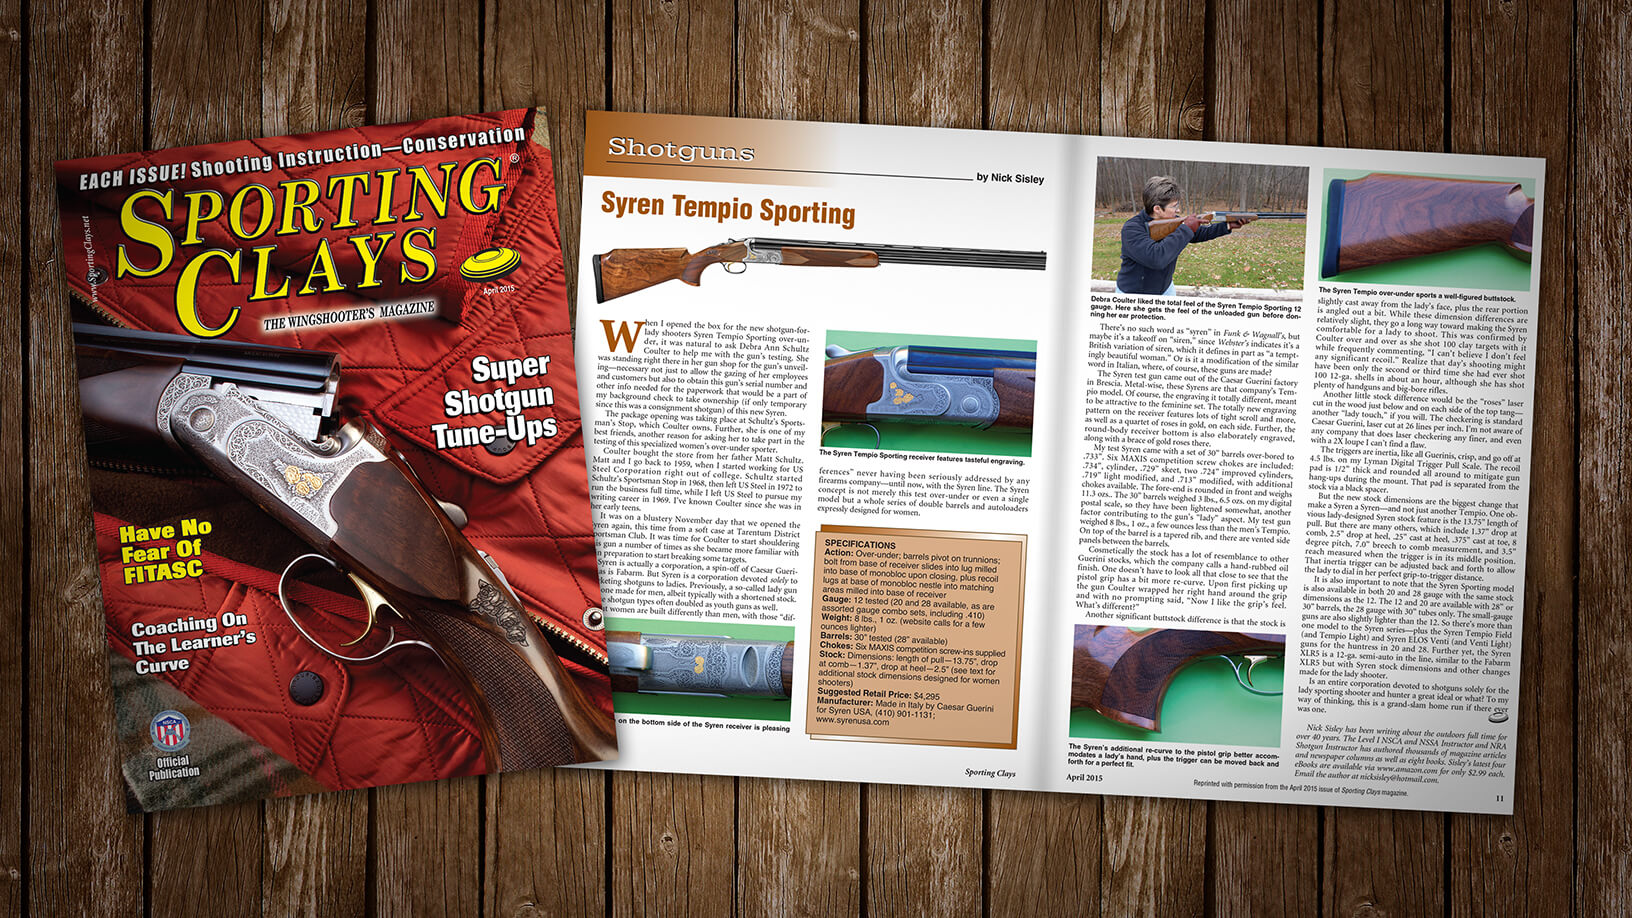 [Sporting Clays Magazine 04.15] Shotguns: Syren Tempio Sporting